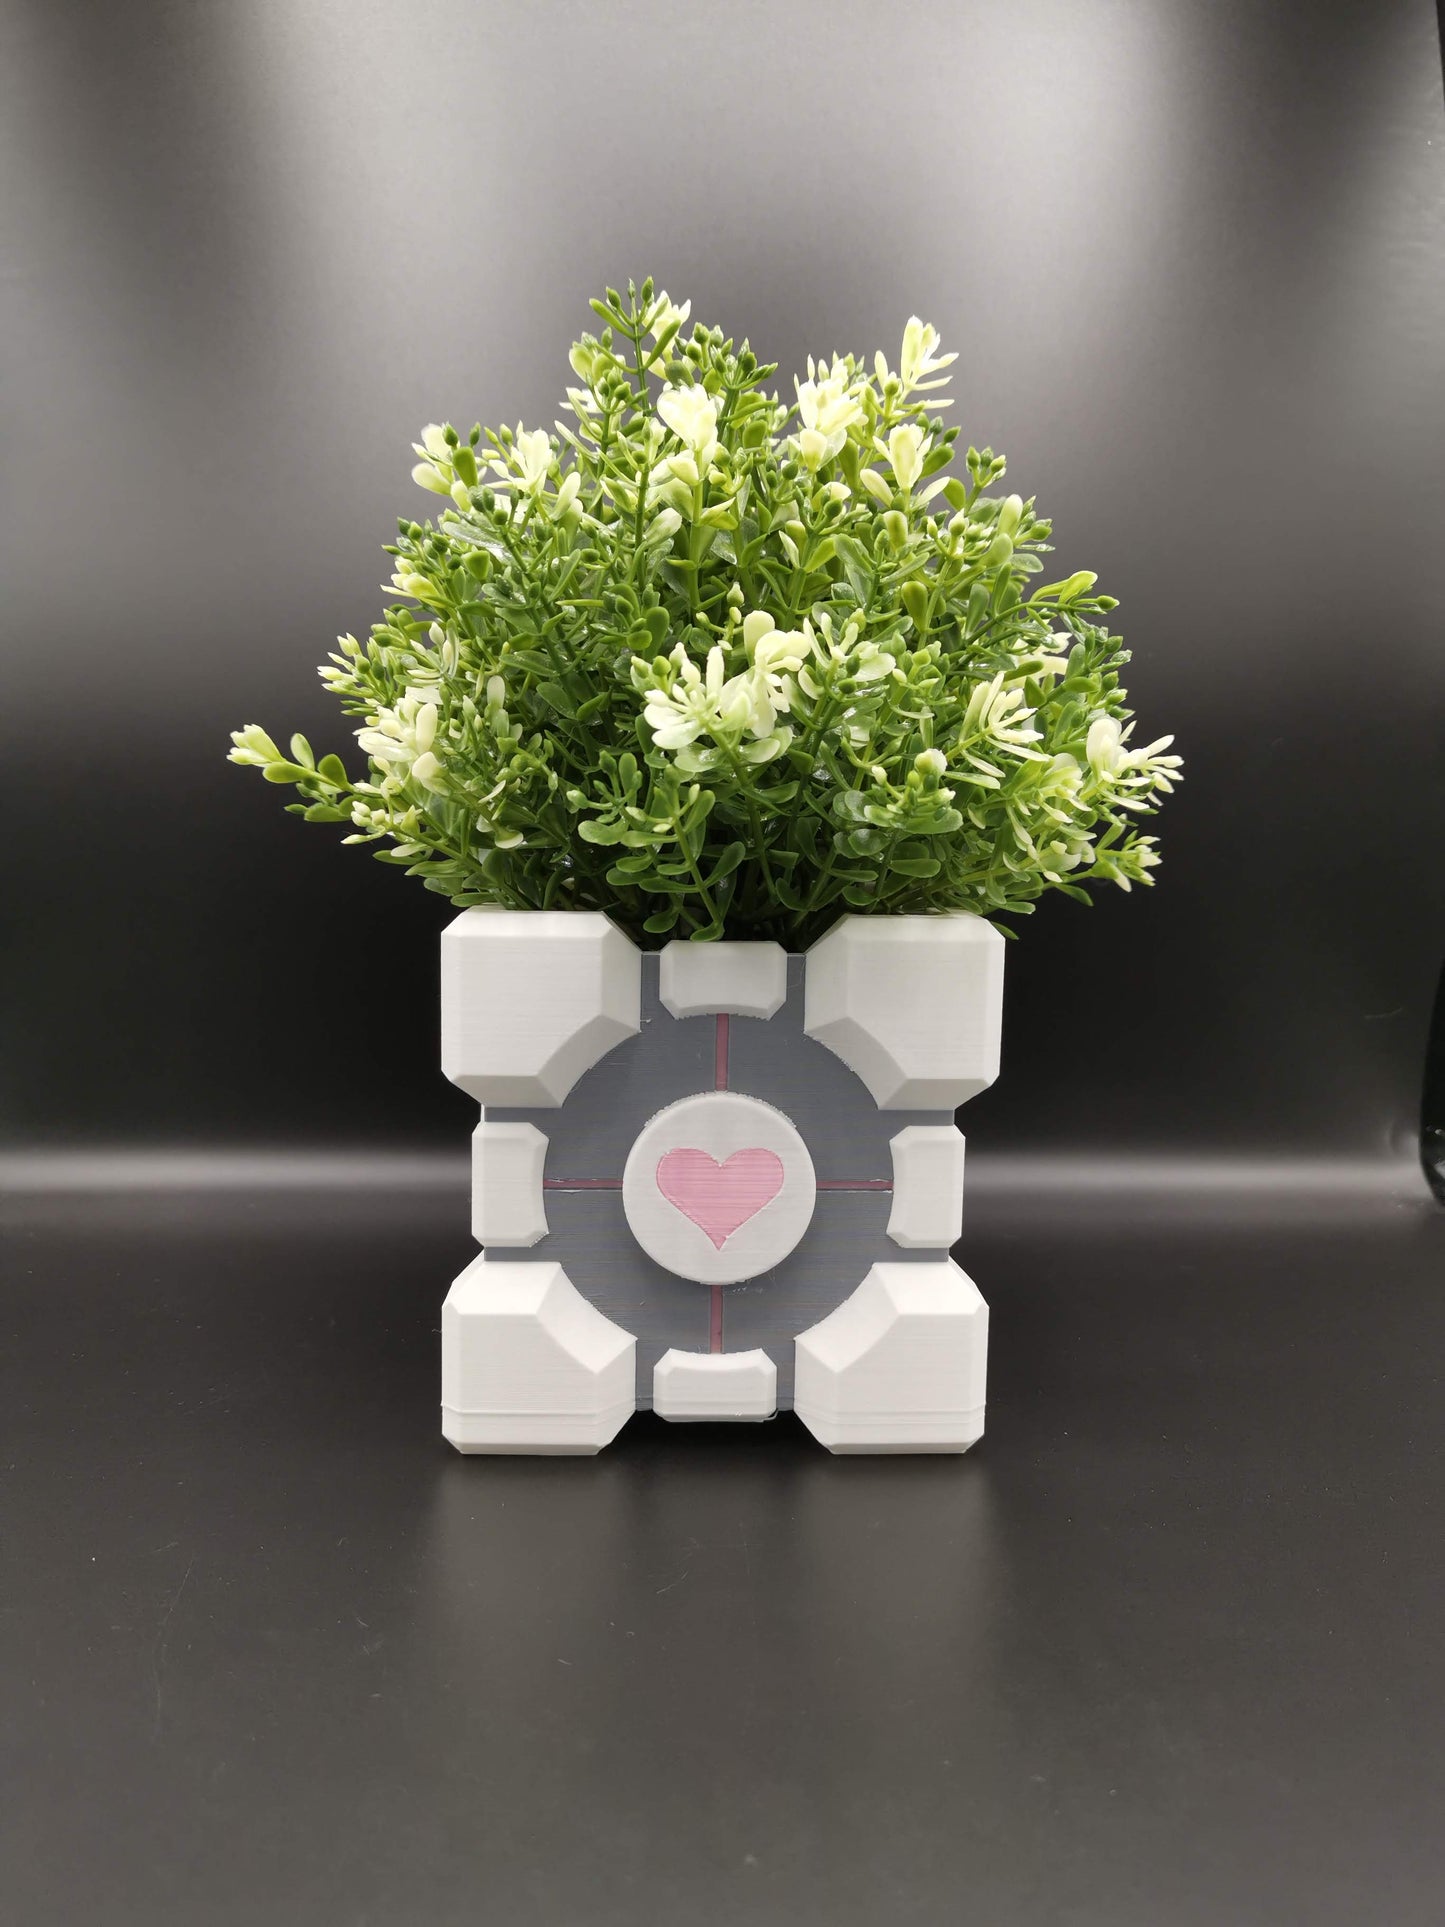 Companion Cube Portal planter with plant